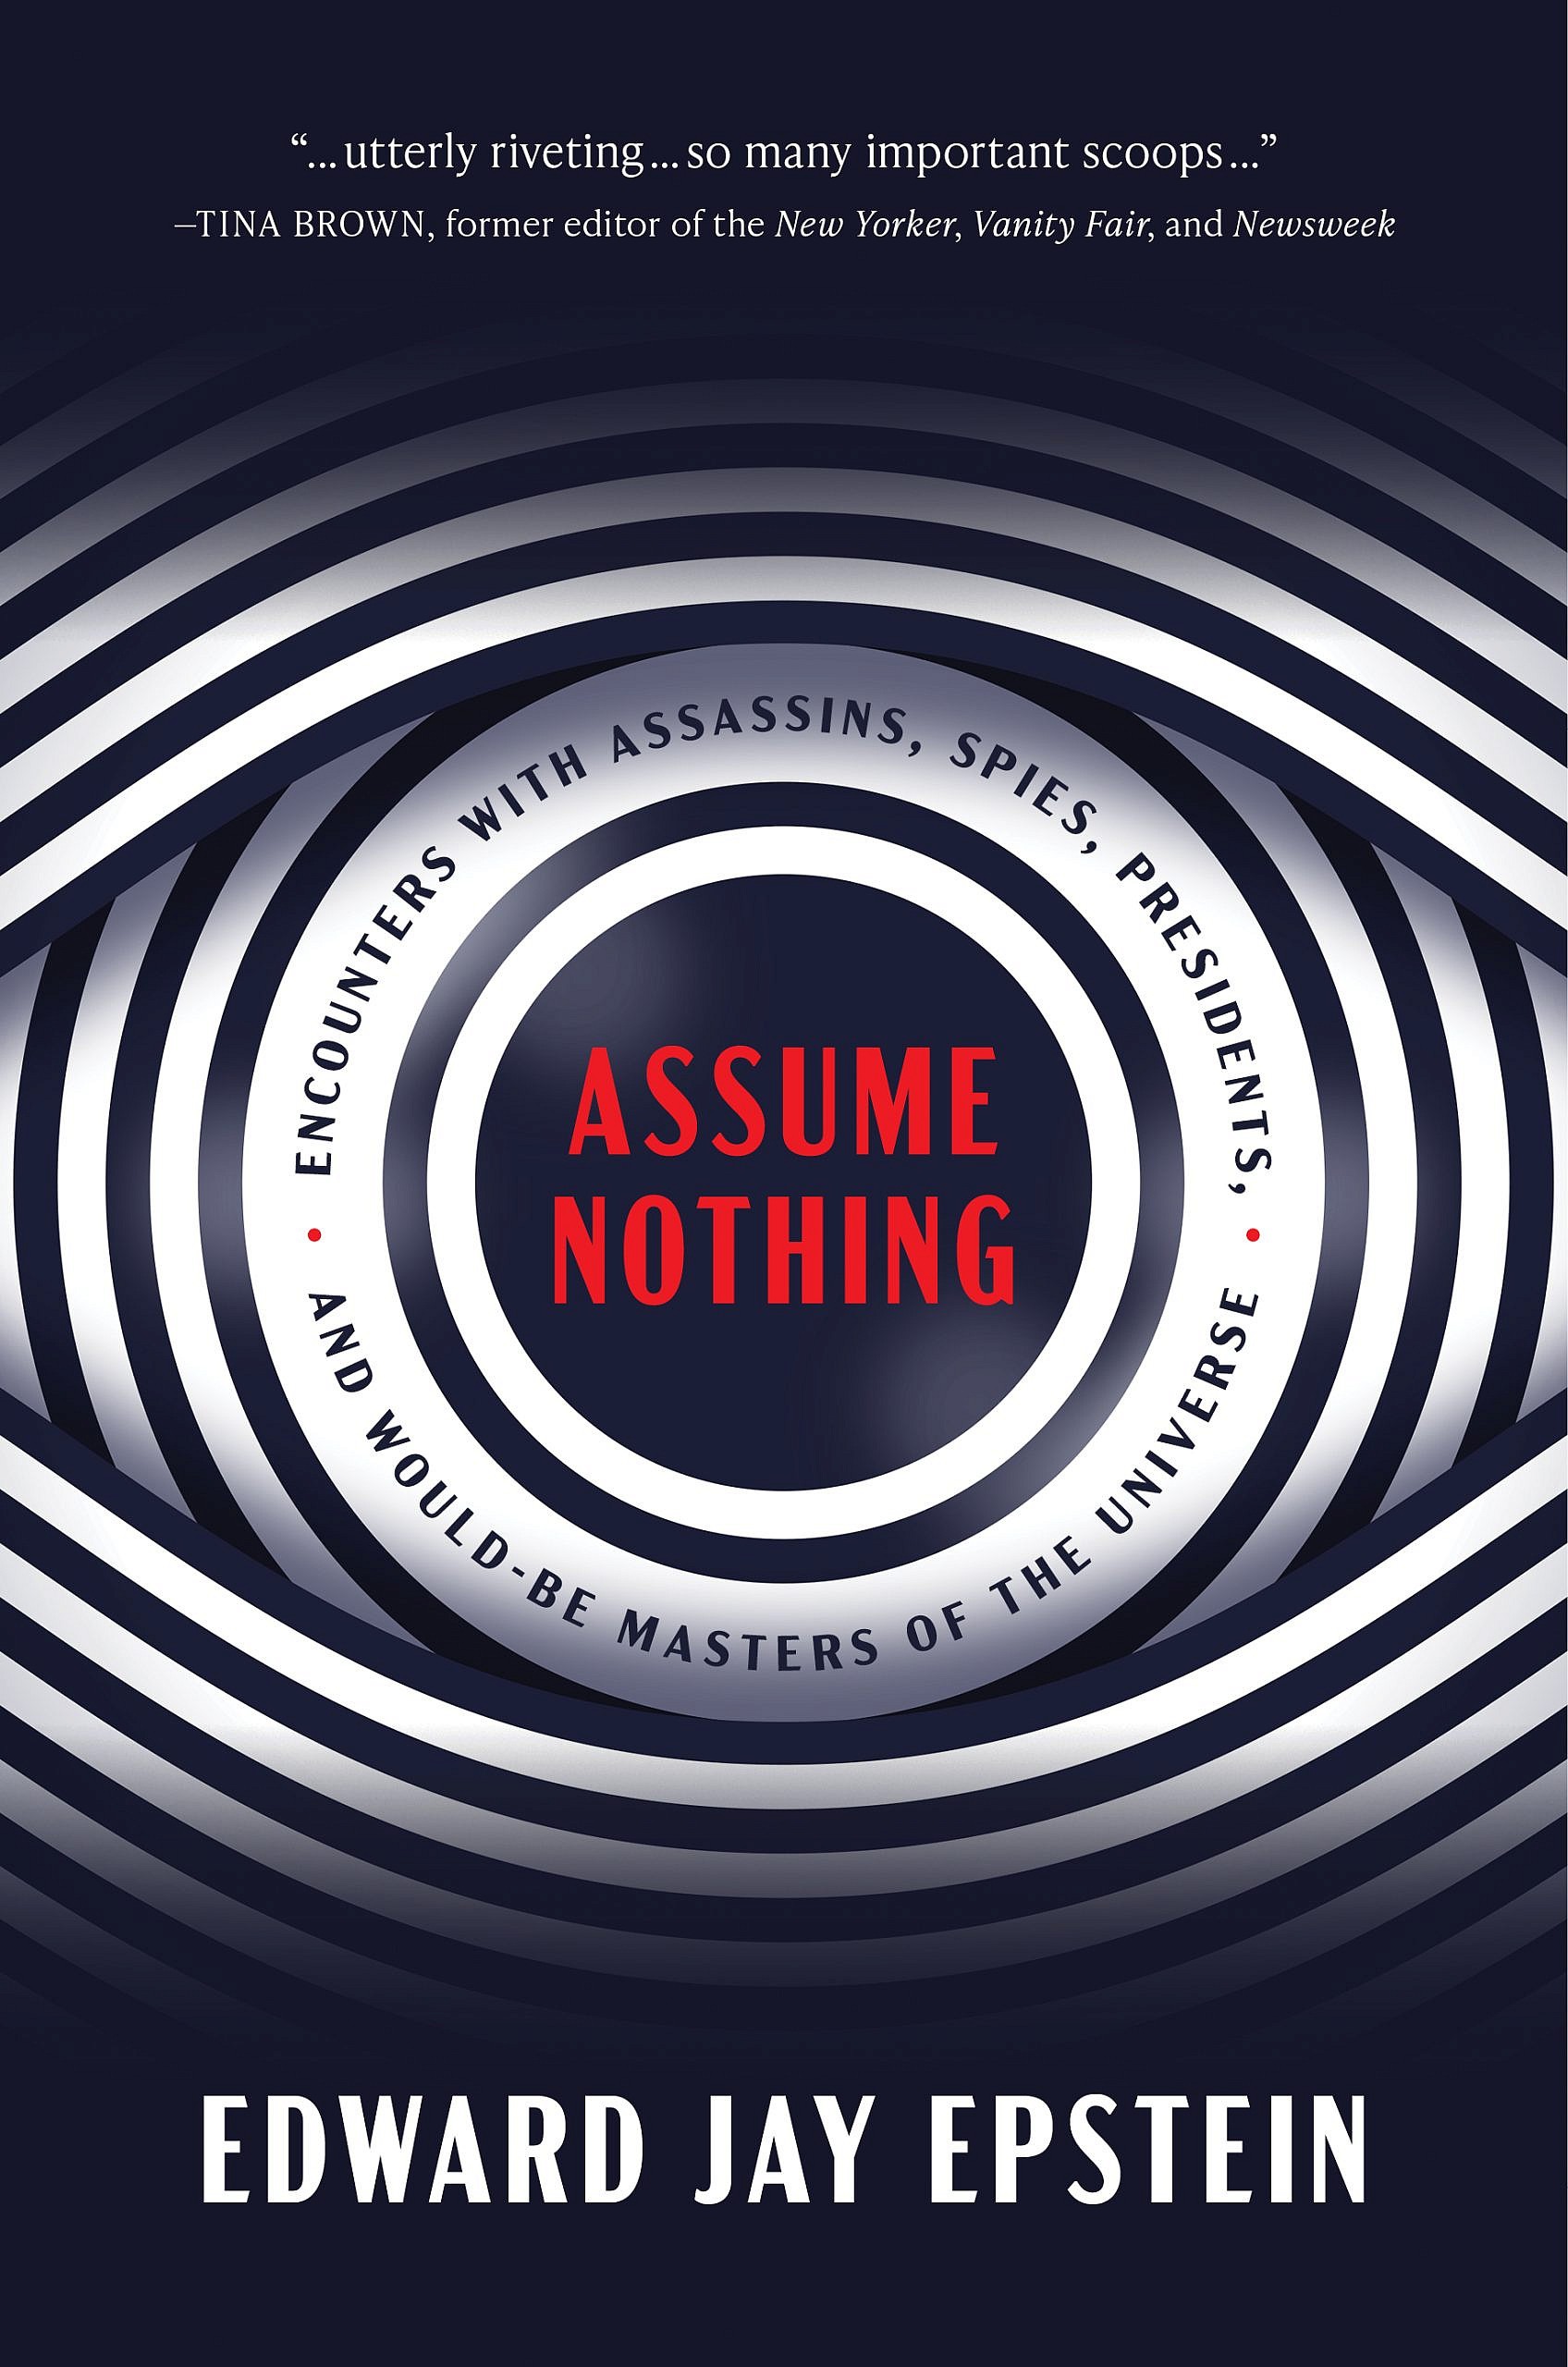 Book jacket of “Assume Nothing” by Edward Jay Epstein. Credit: Encounter Books.